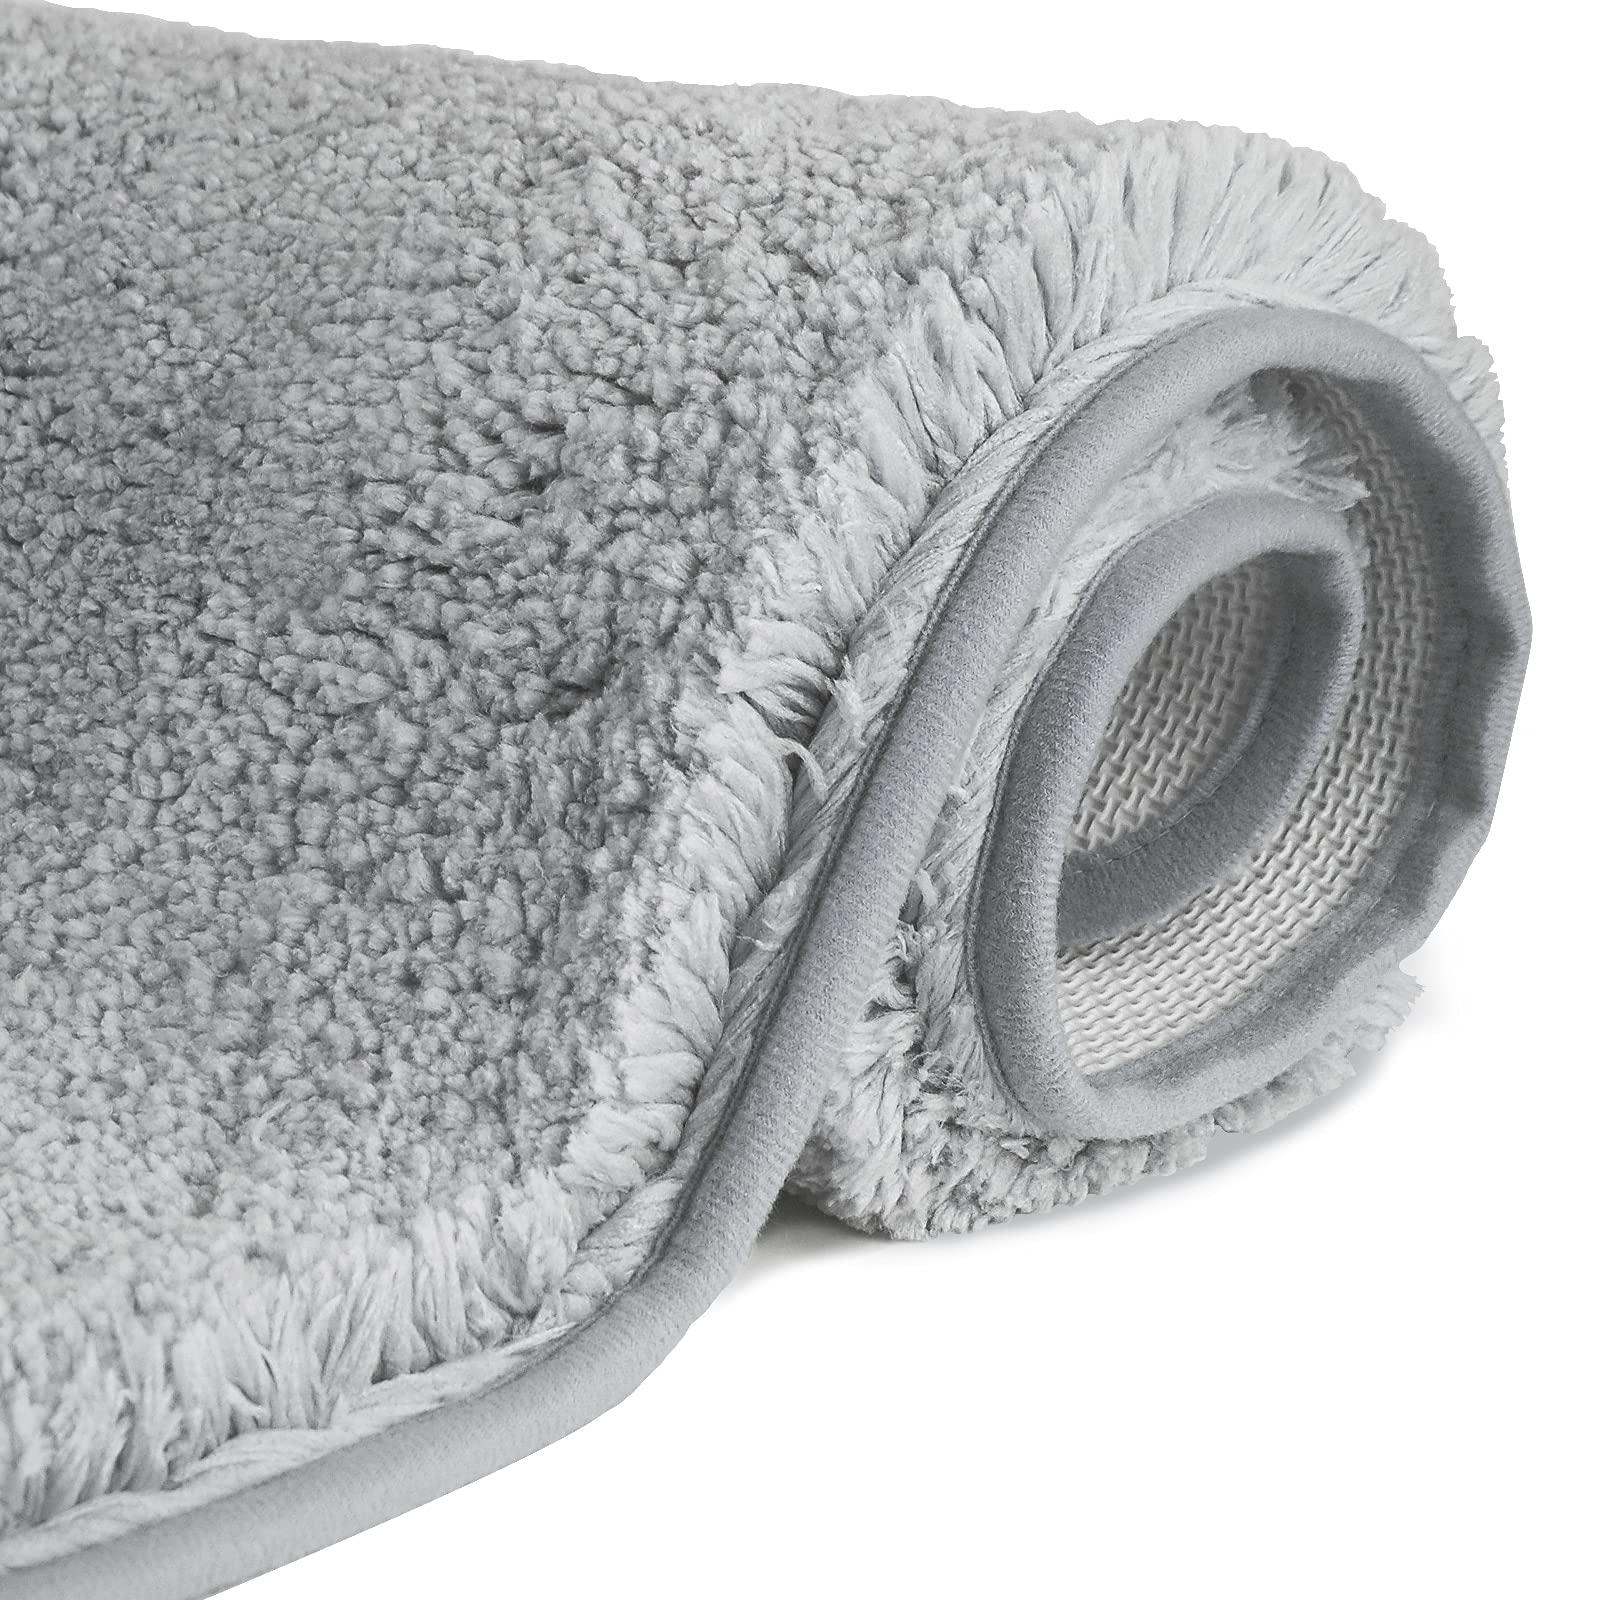 FCSDETAIL Non-slip Bath Mat 80 x 150 cm, Quick Dry Absorbent Bathroom Rug, Machine Washable Soft Microfiber Carpet for Tub, Shower, Floor, Light Gray